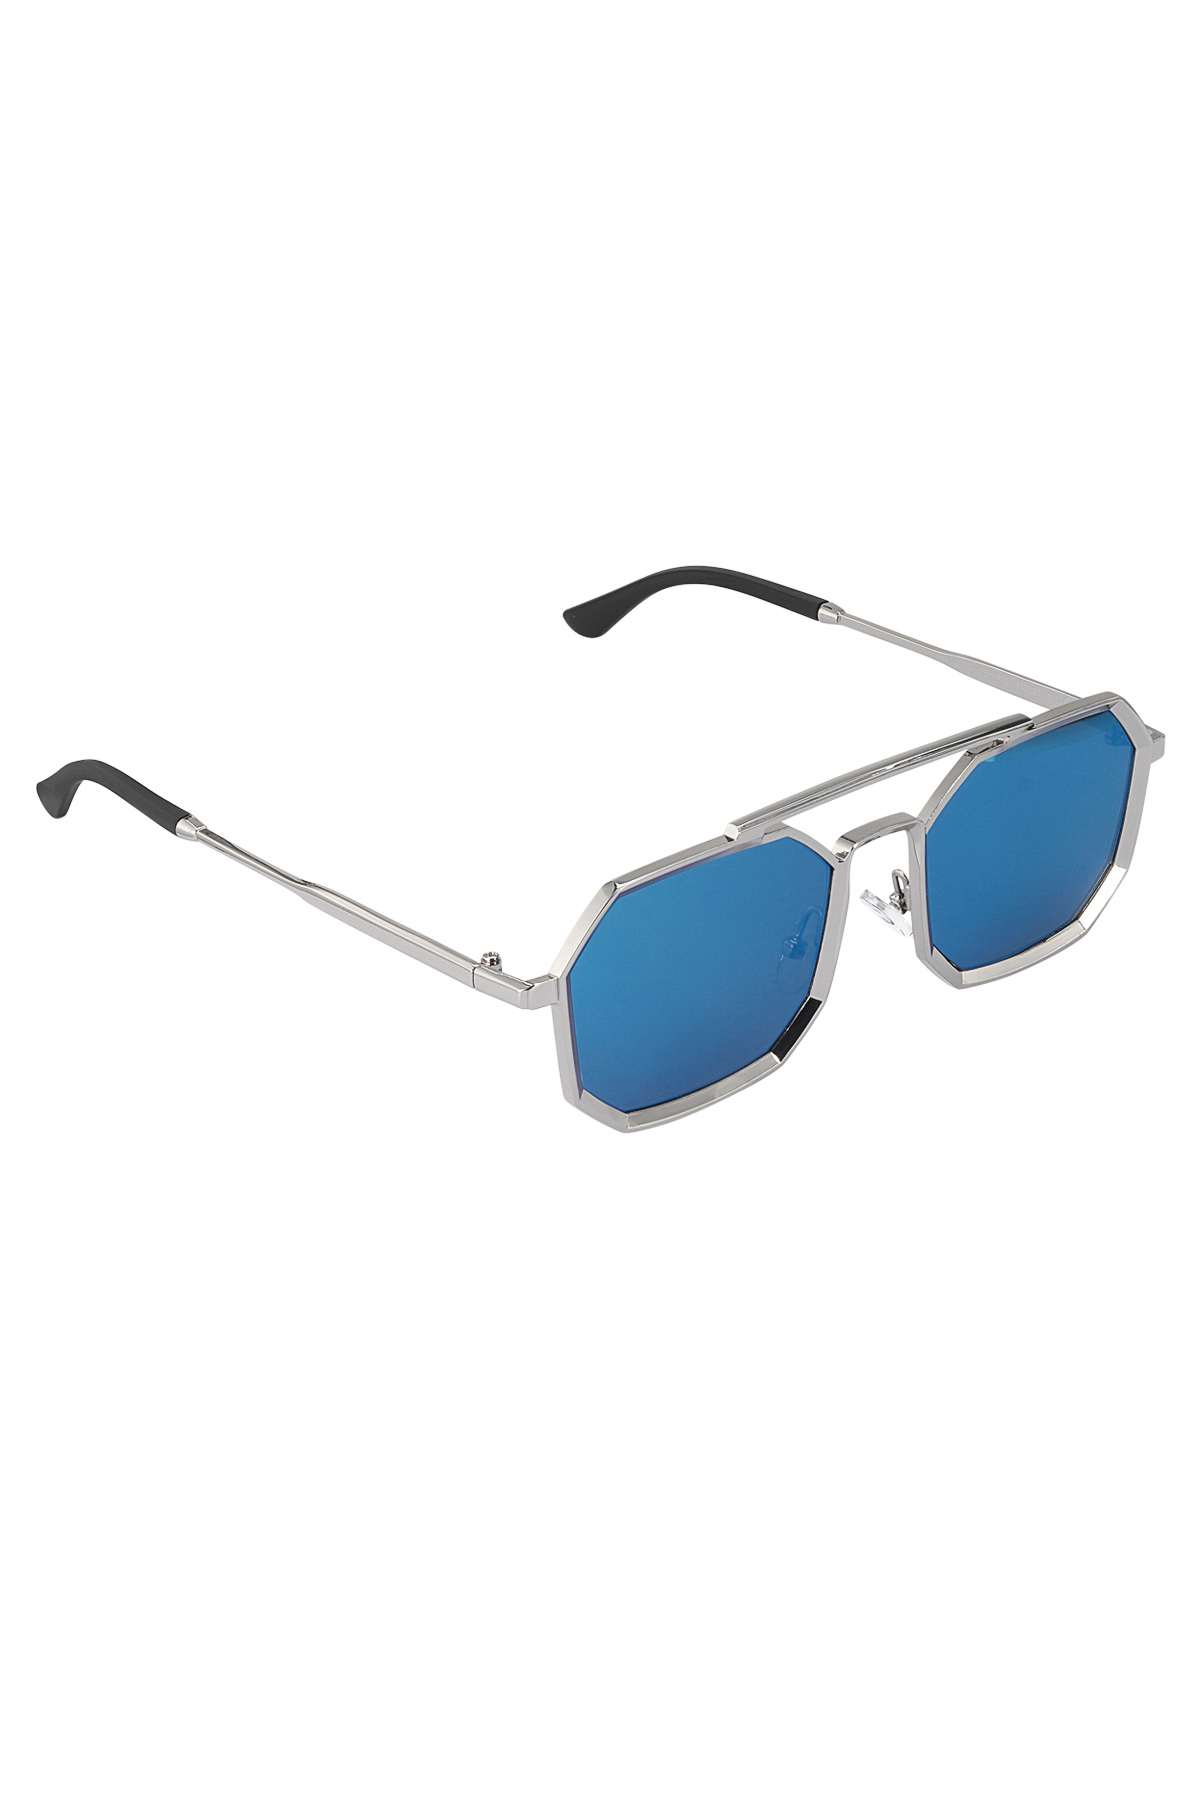 Sunglasses LuminLens - blue silver